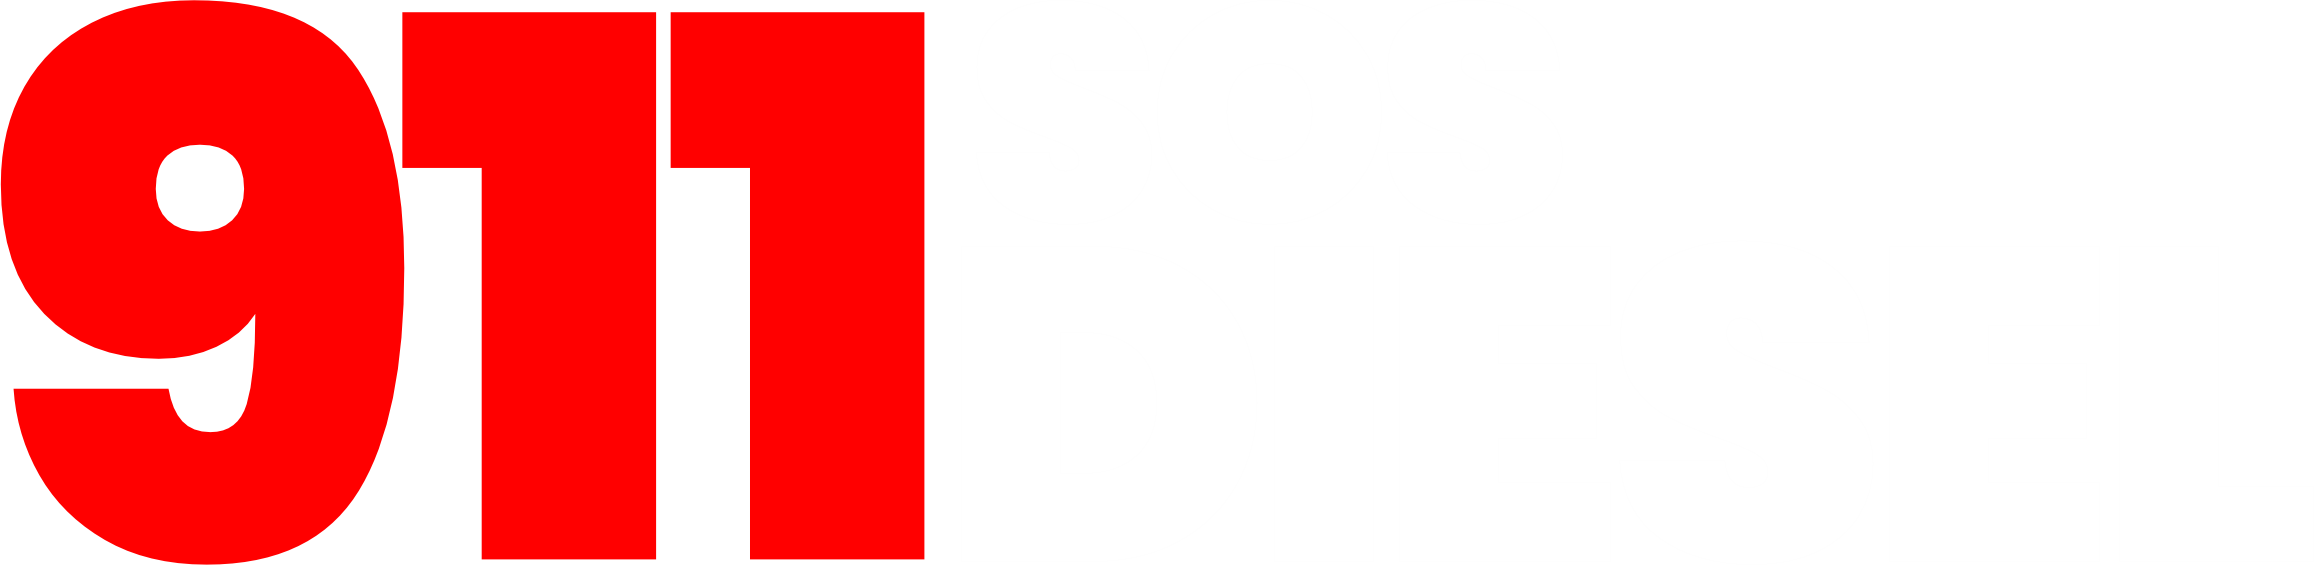 sosdiesel-logo